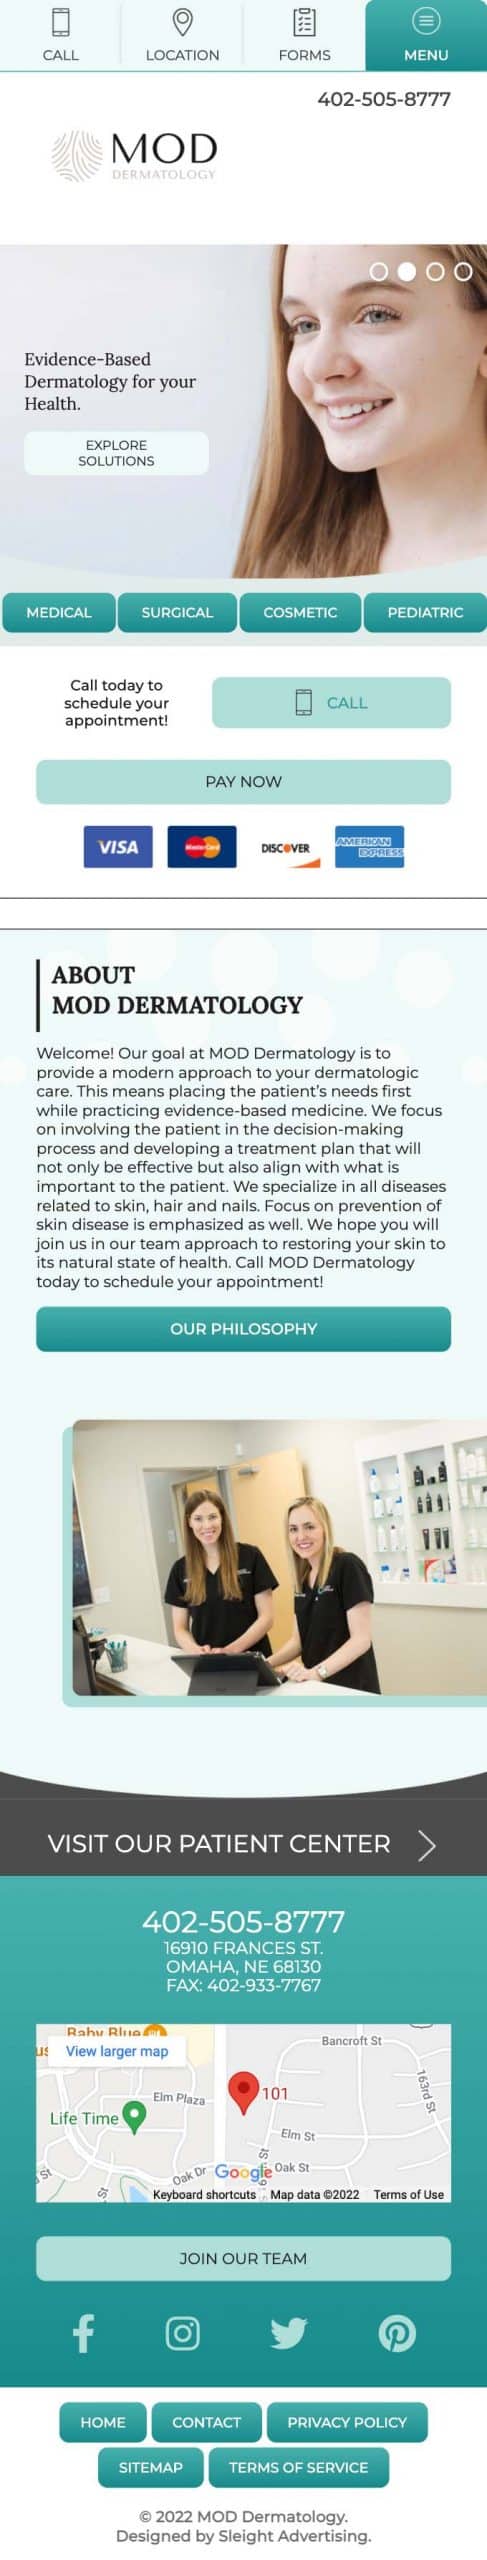 MOD Dermatology Mobile-First Website